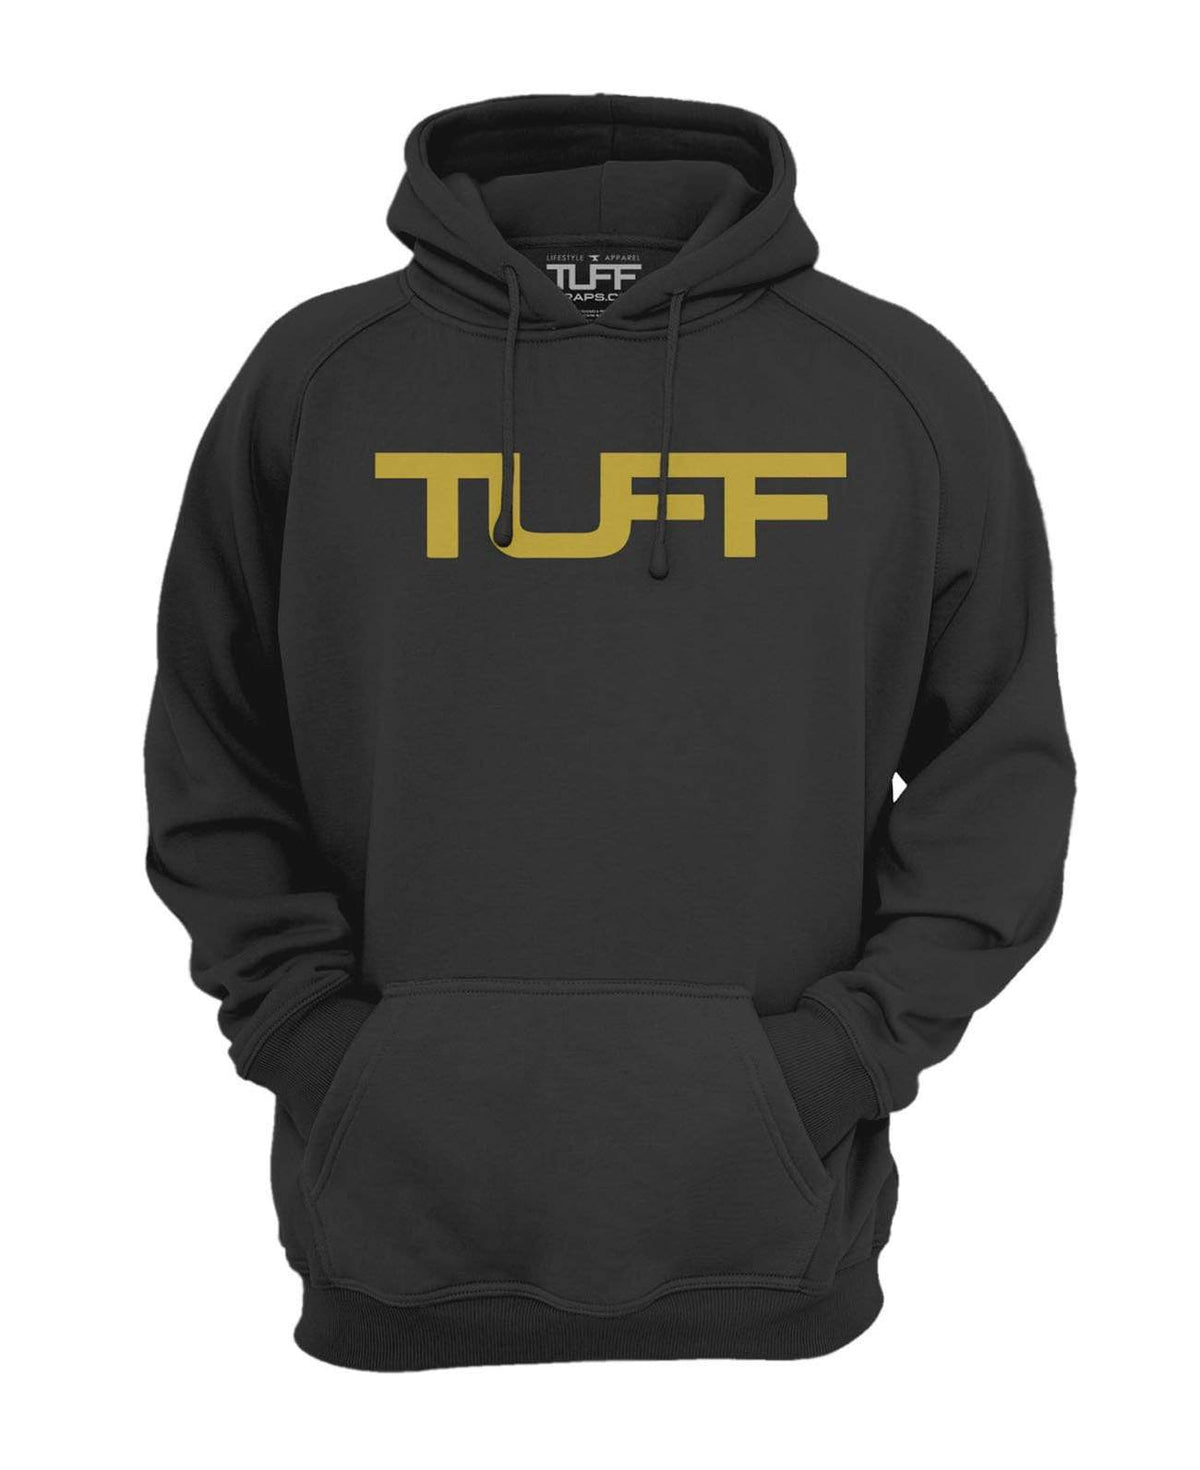 TUFF Apocalyptic Hooded Sweatshirt S / Black w/Gold TuffWraps.com